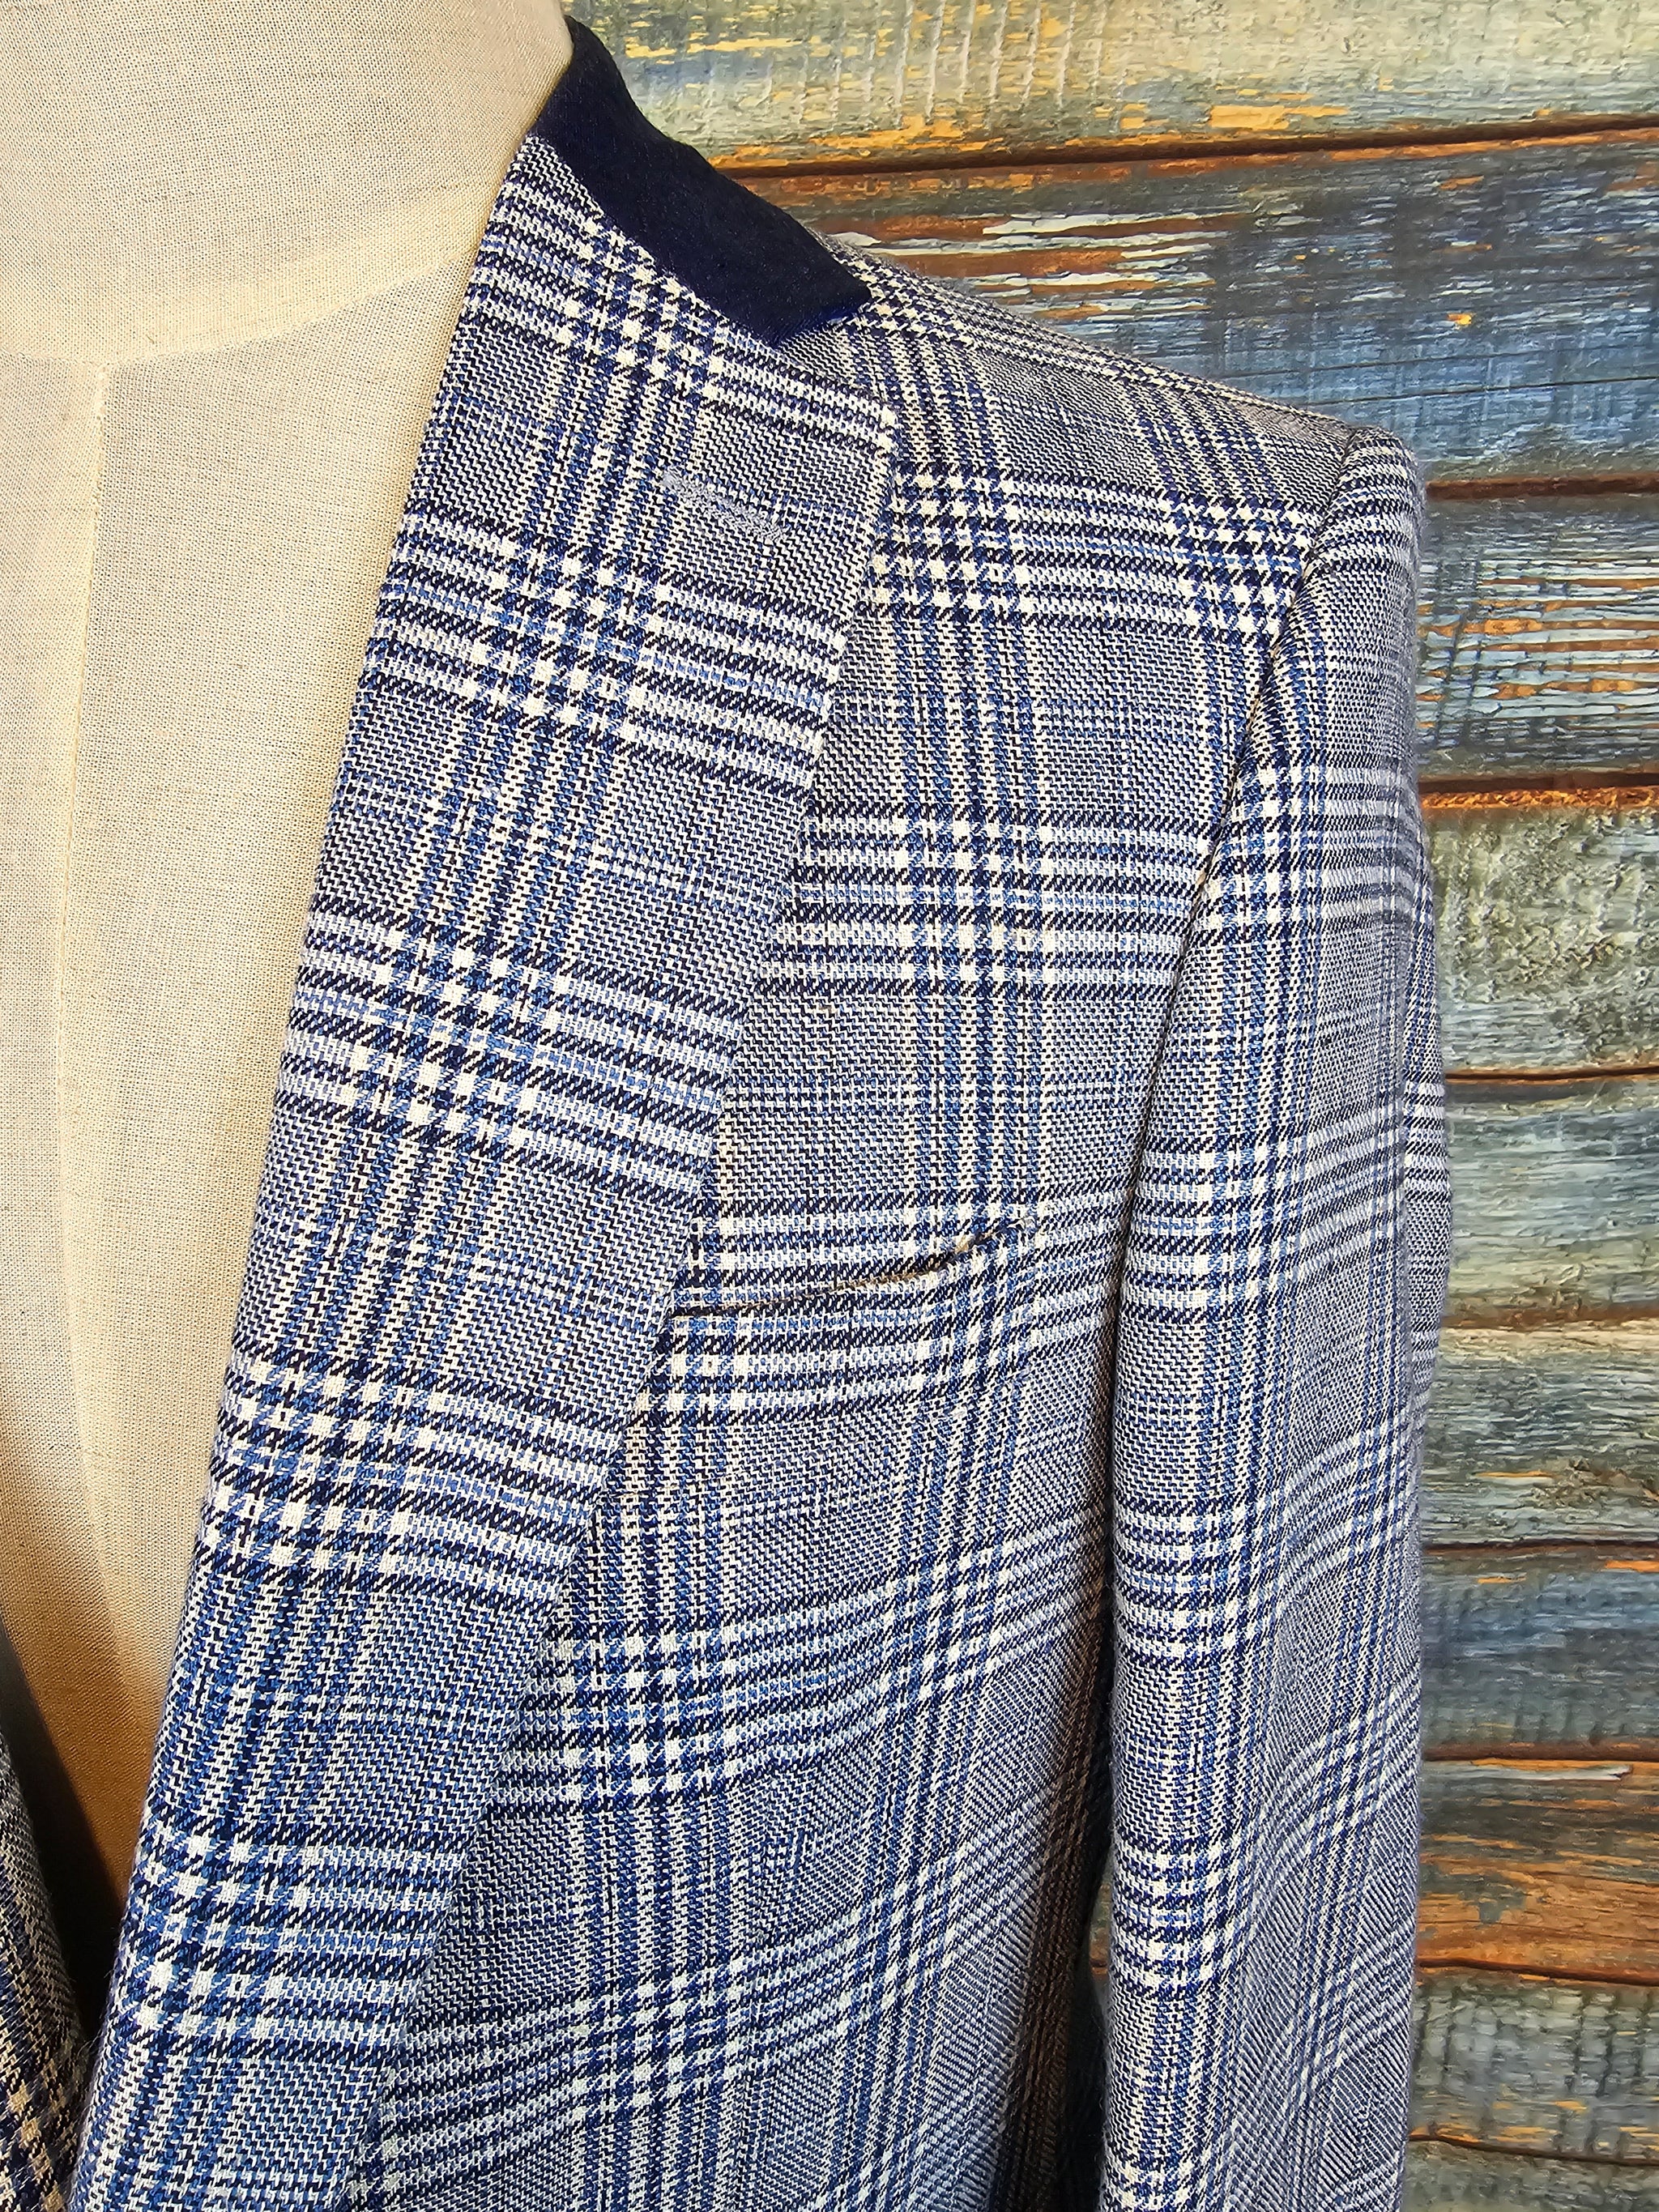 Mazzelli "Lanificio fabric" Cotton/Linen overcheck Jacket